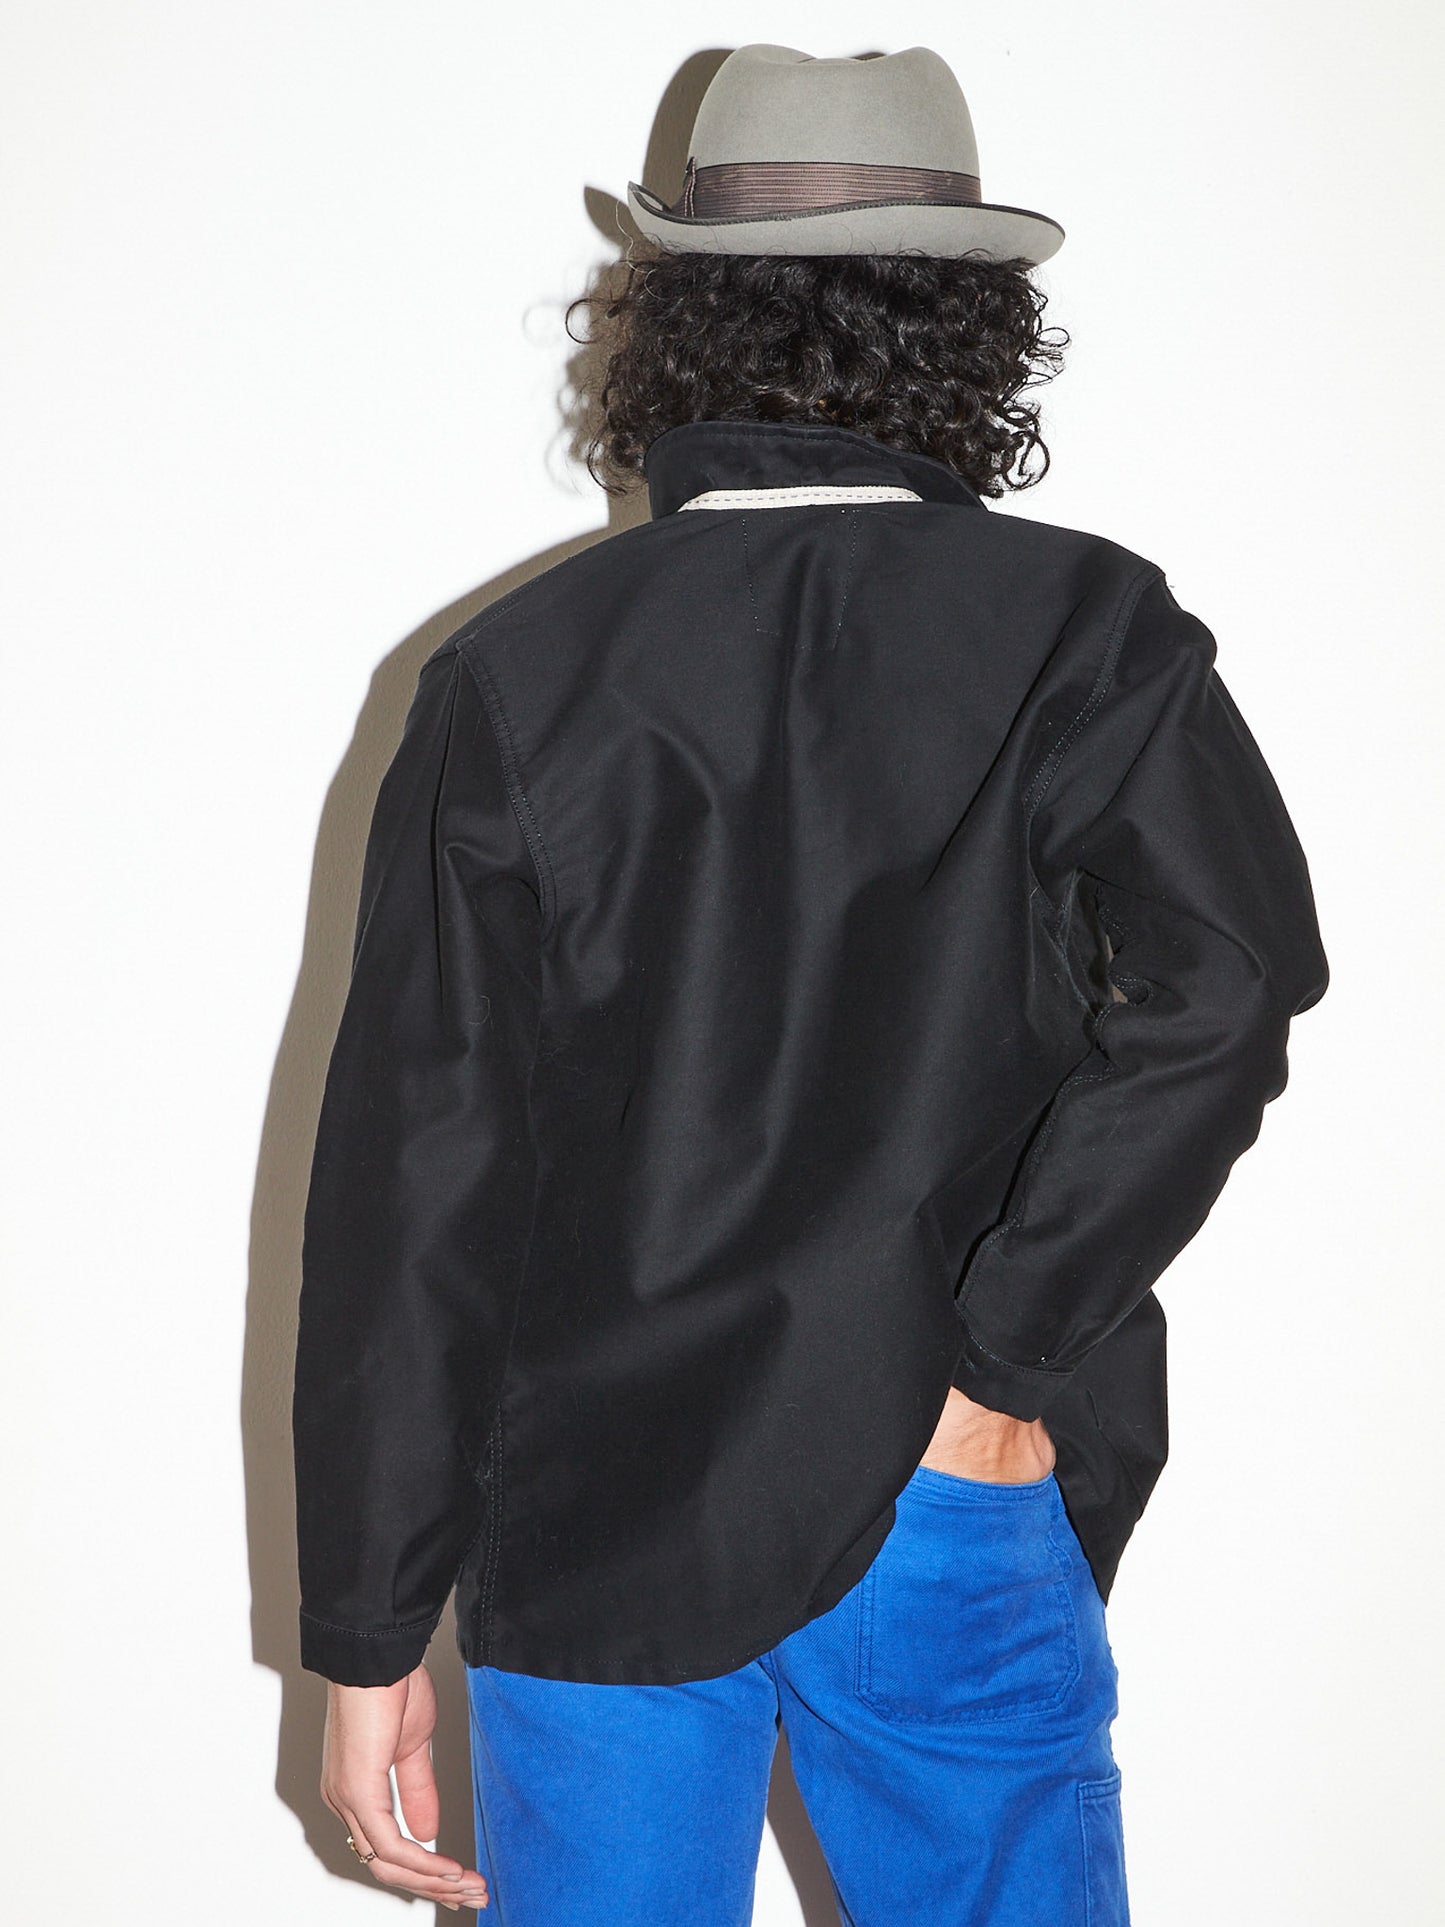 Veste de Charpentier noir (Moleskin workwear jacket)